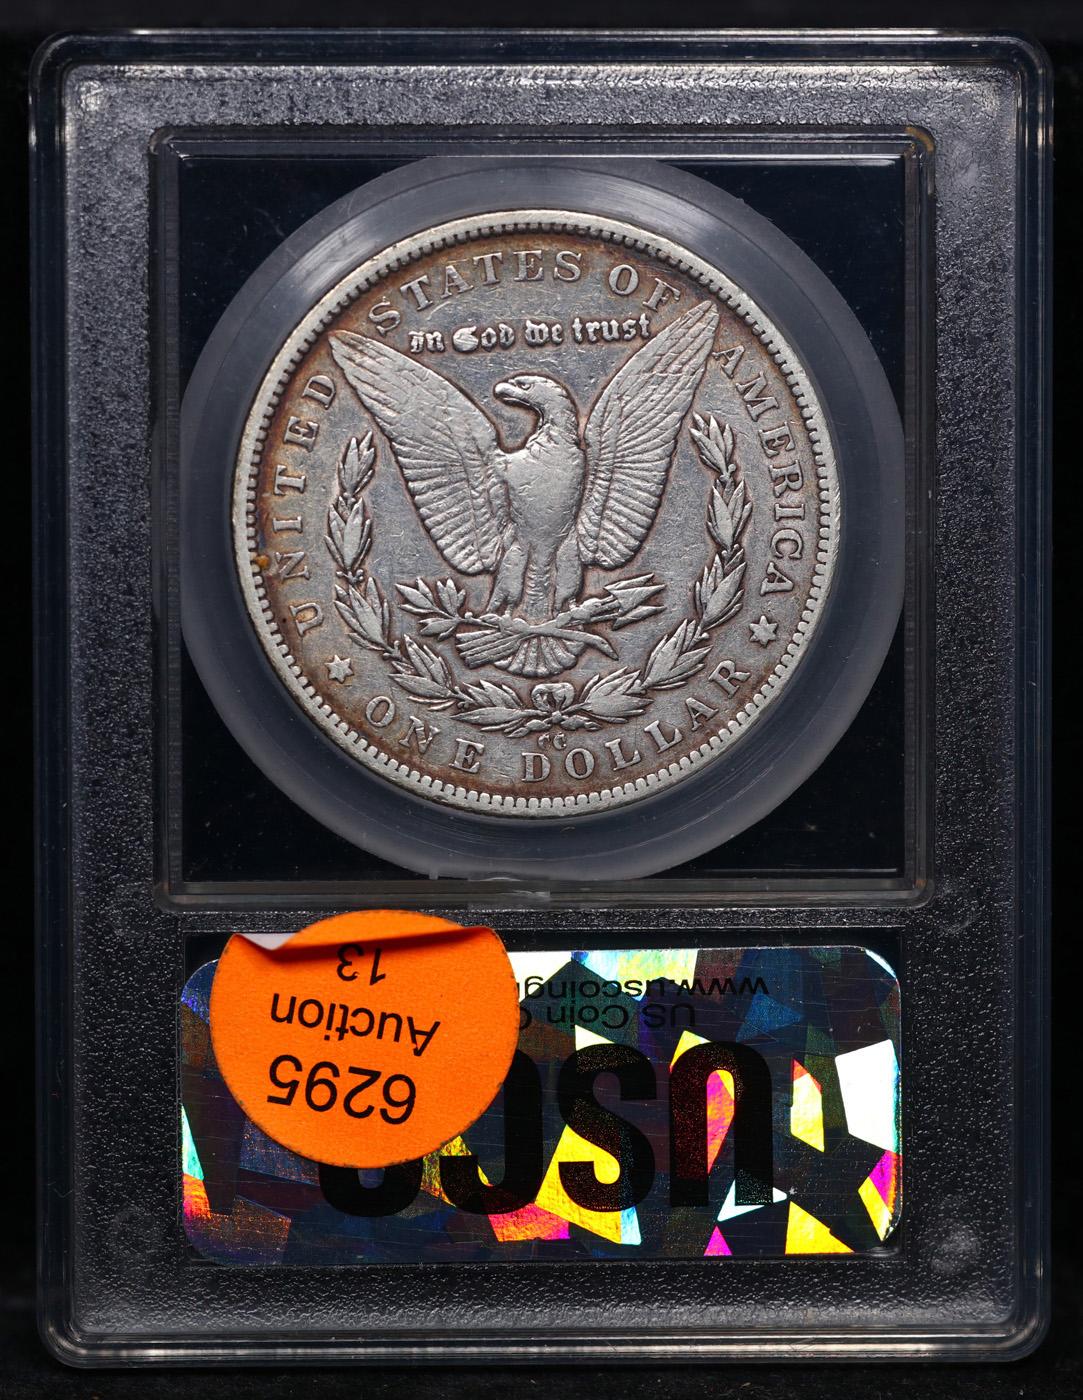 1879-cc/cc Morgan Dollar VAM-3 Top 100 1 Graded xf BY USCG